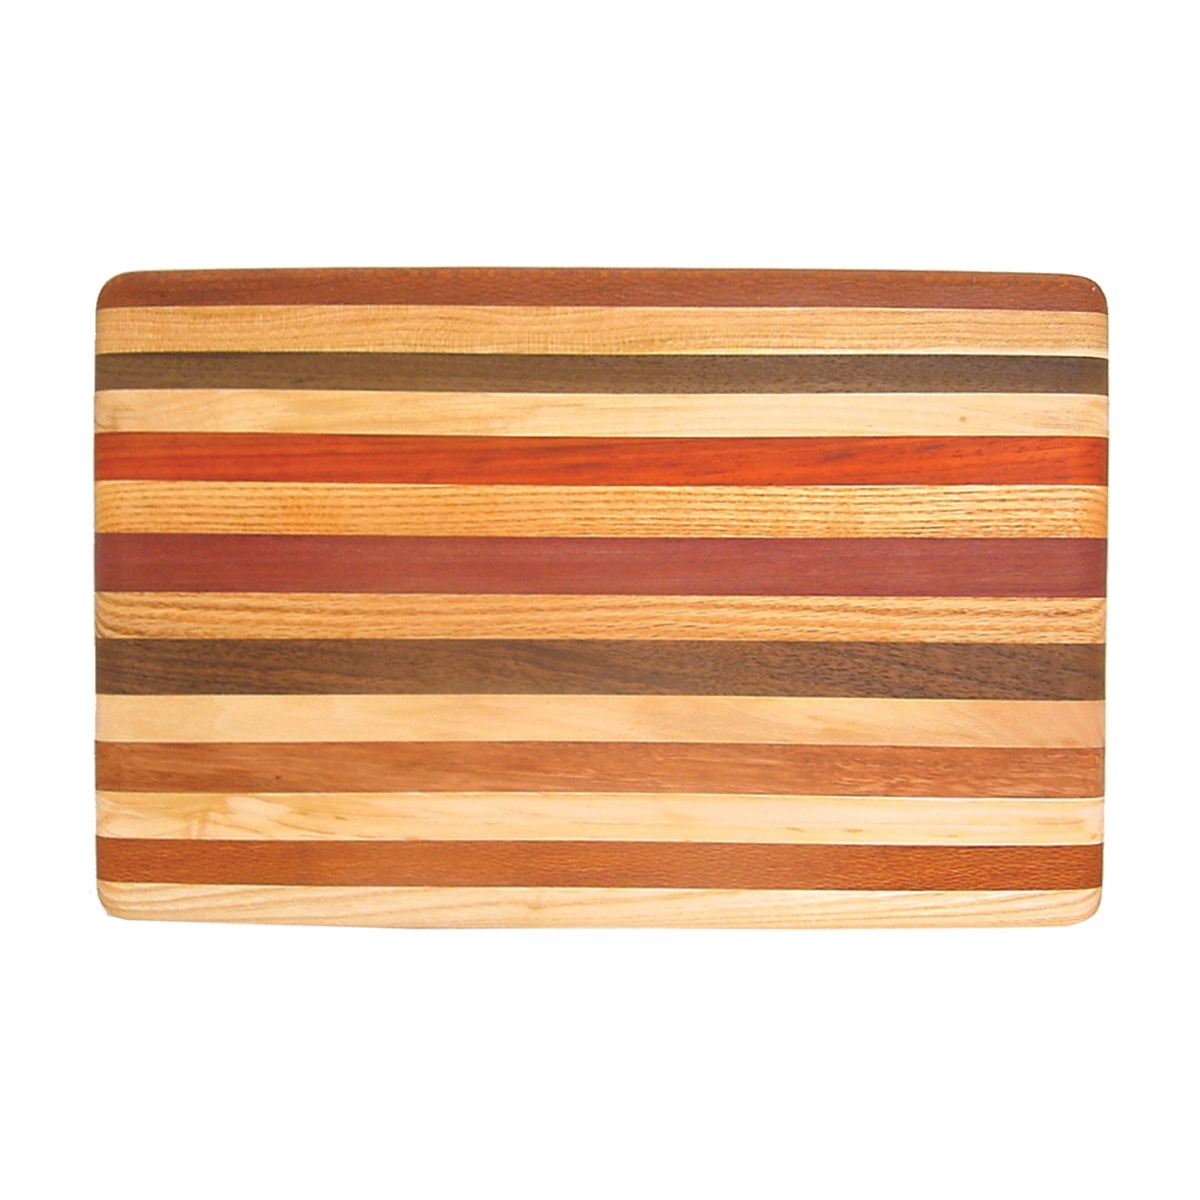 Large Exotic Wood Cutting Board Image